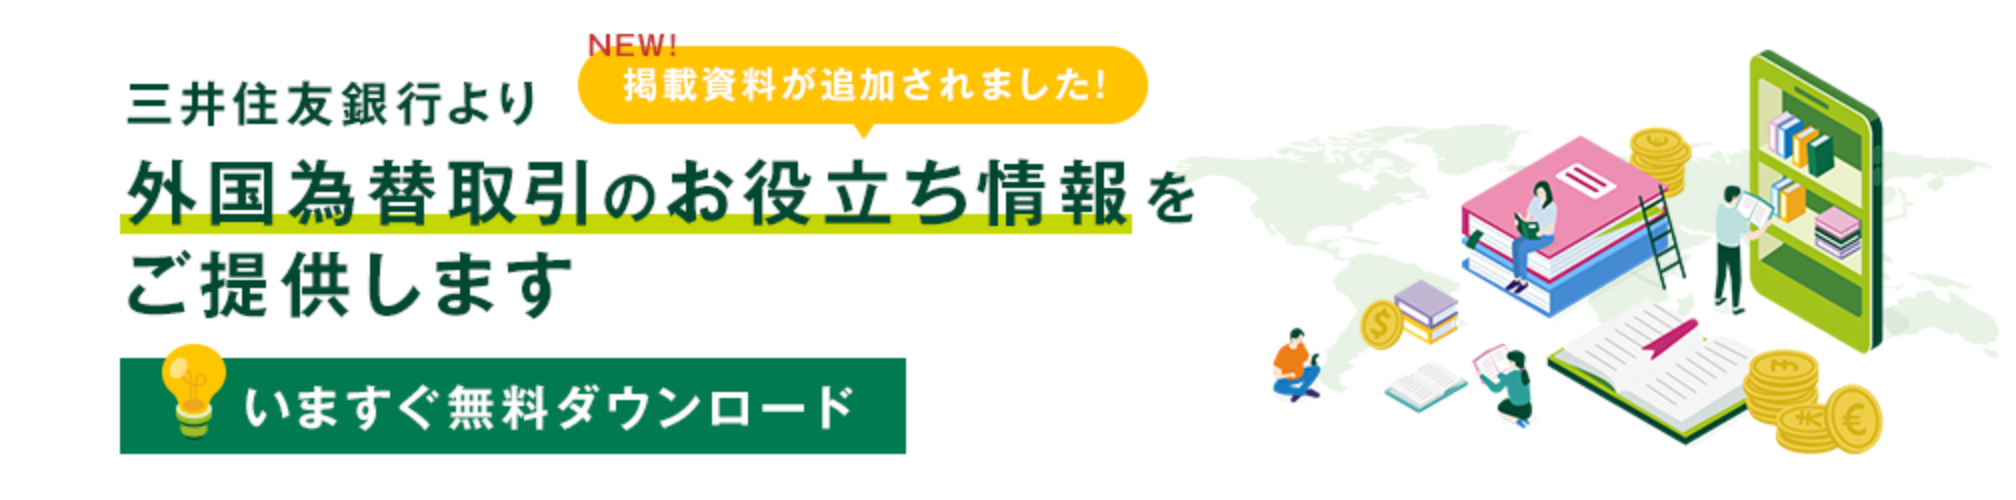 NEW!掲載資料が追加されました！ 三井住友銀行より外貨為替取引のお役立ち情報をご提供します 今すぐ無料ダウンロード